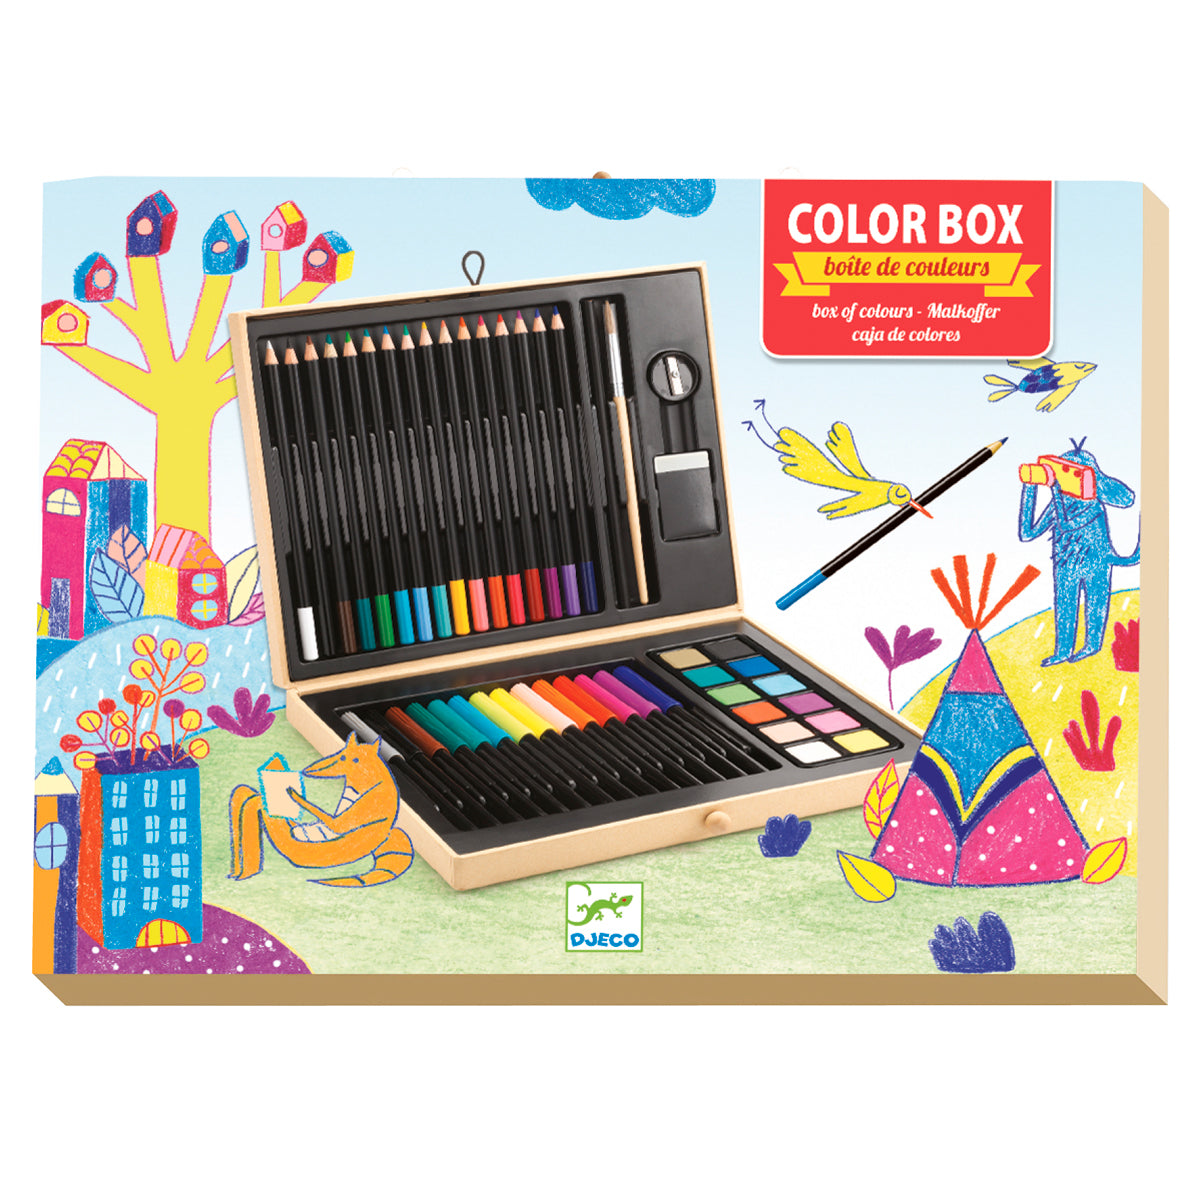 Colour Box of Colours Djeco box of coloured pens, pencils and paints